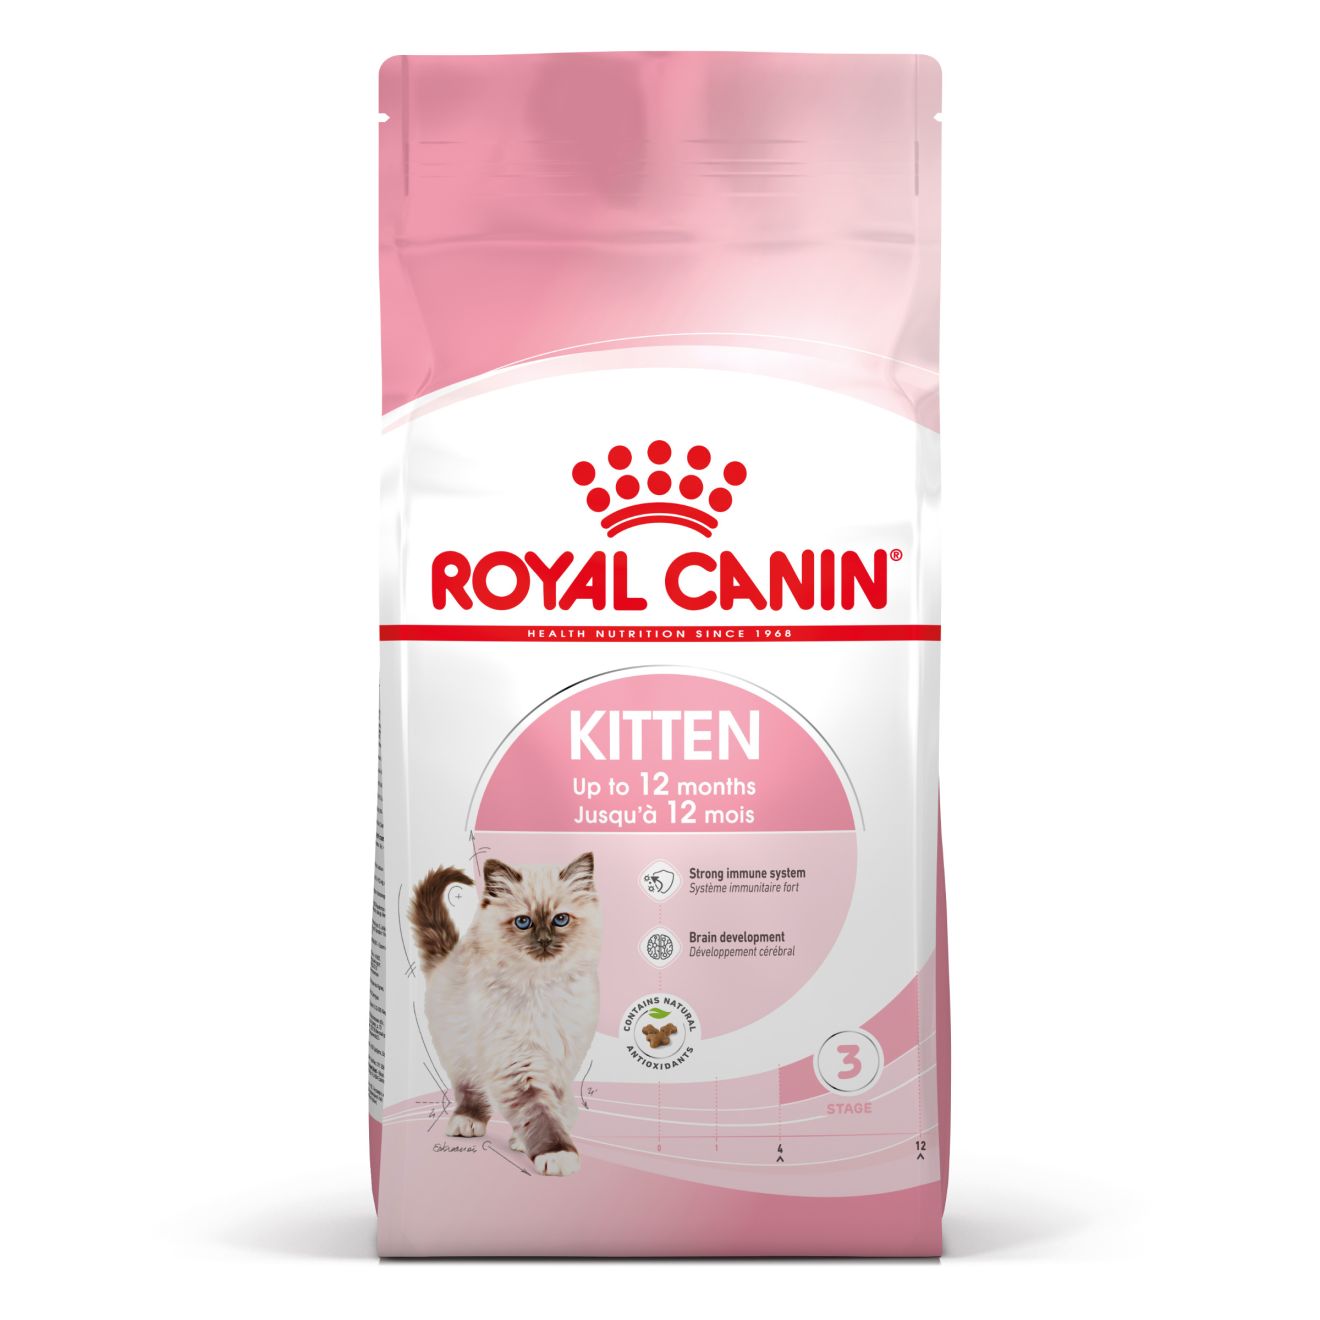 ROYAL CANIN KITTEN Trockenfutter für Kätzchen bis zum 12. Monat 